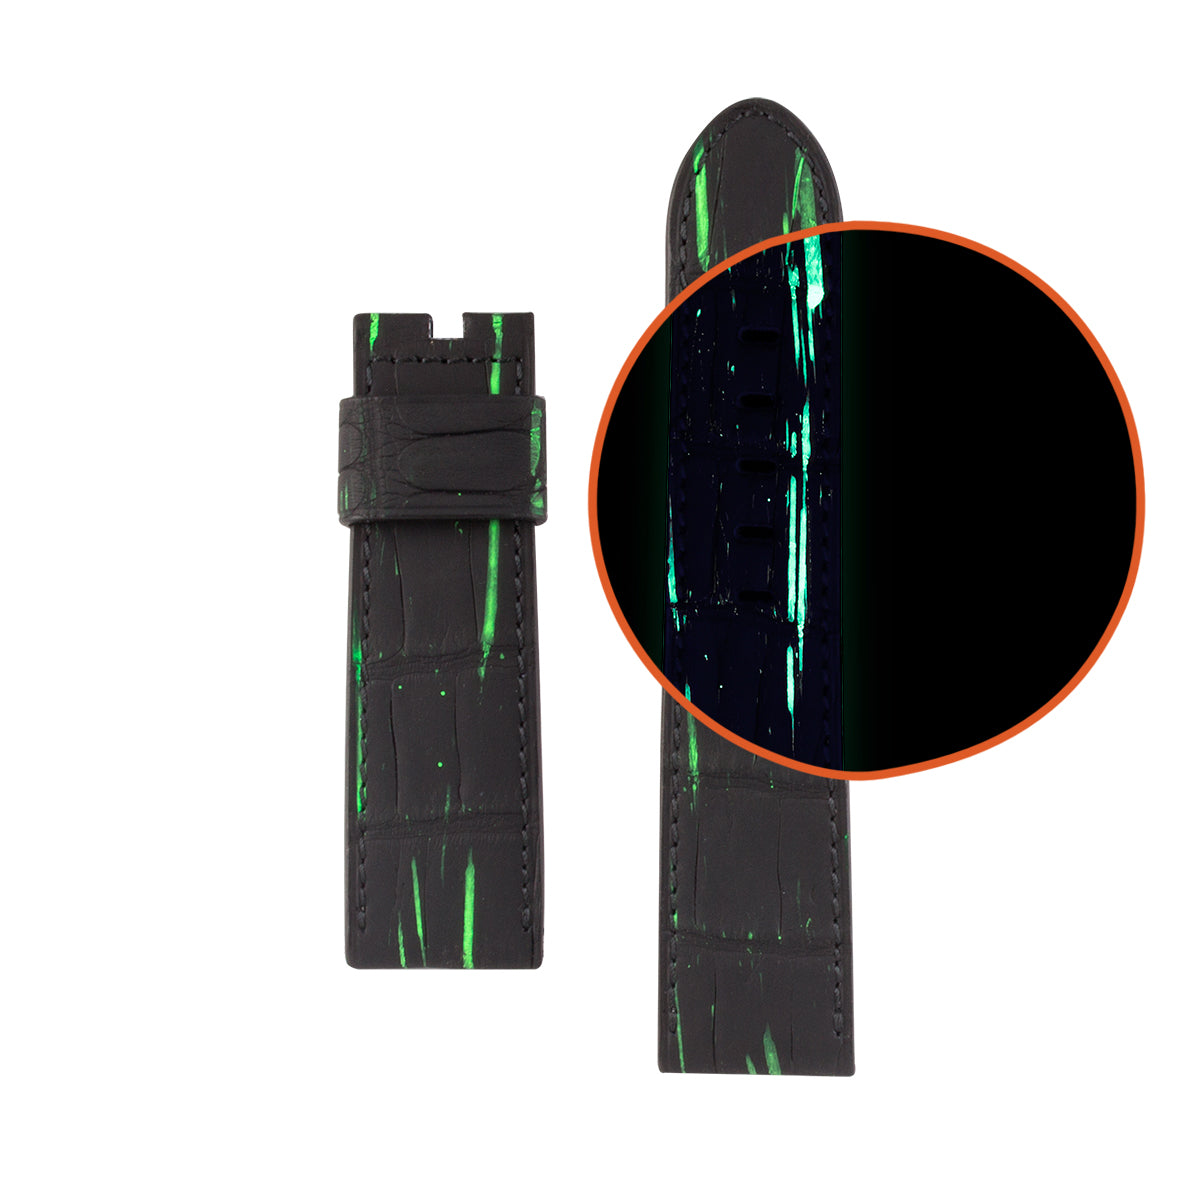 Panerai Radiomir & Luminor - Bracelet de montre cuir fluorescent - Alligator noir / vert - watch band leather strap - ABP Concept -